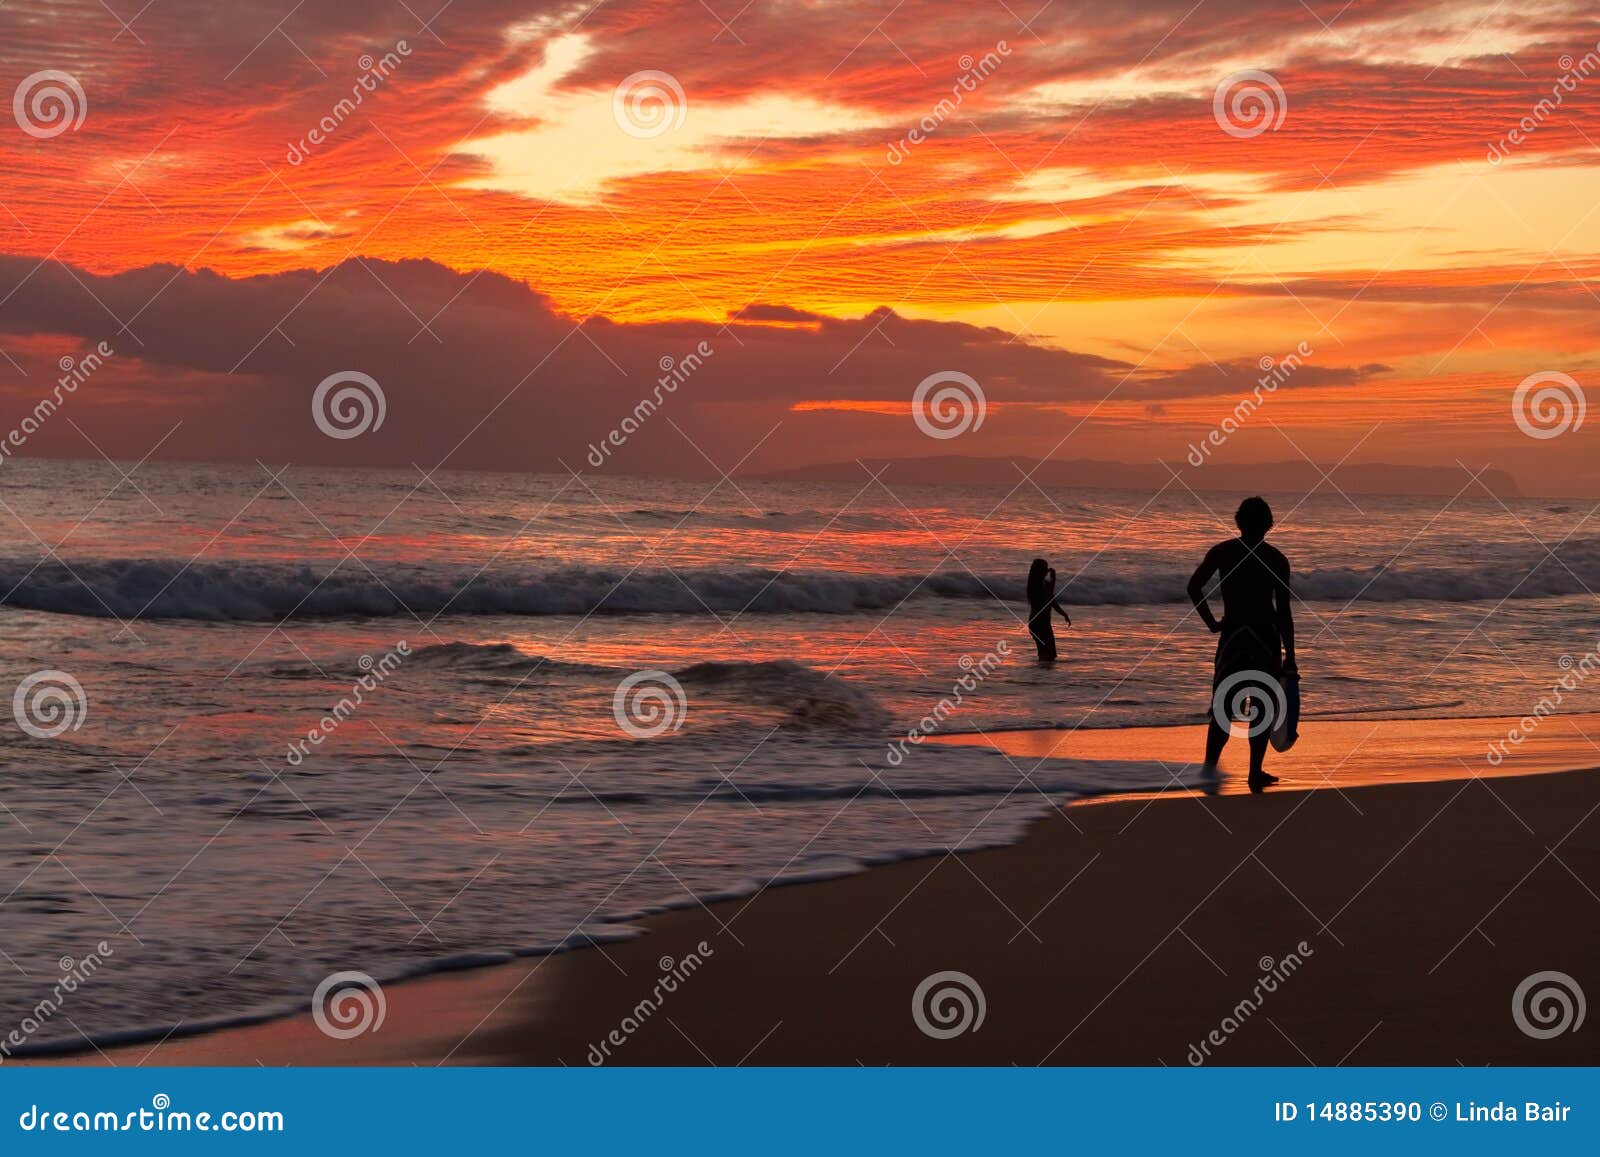 surfer - beach sunset - kauai, hawaii